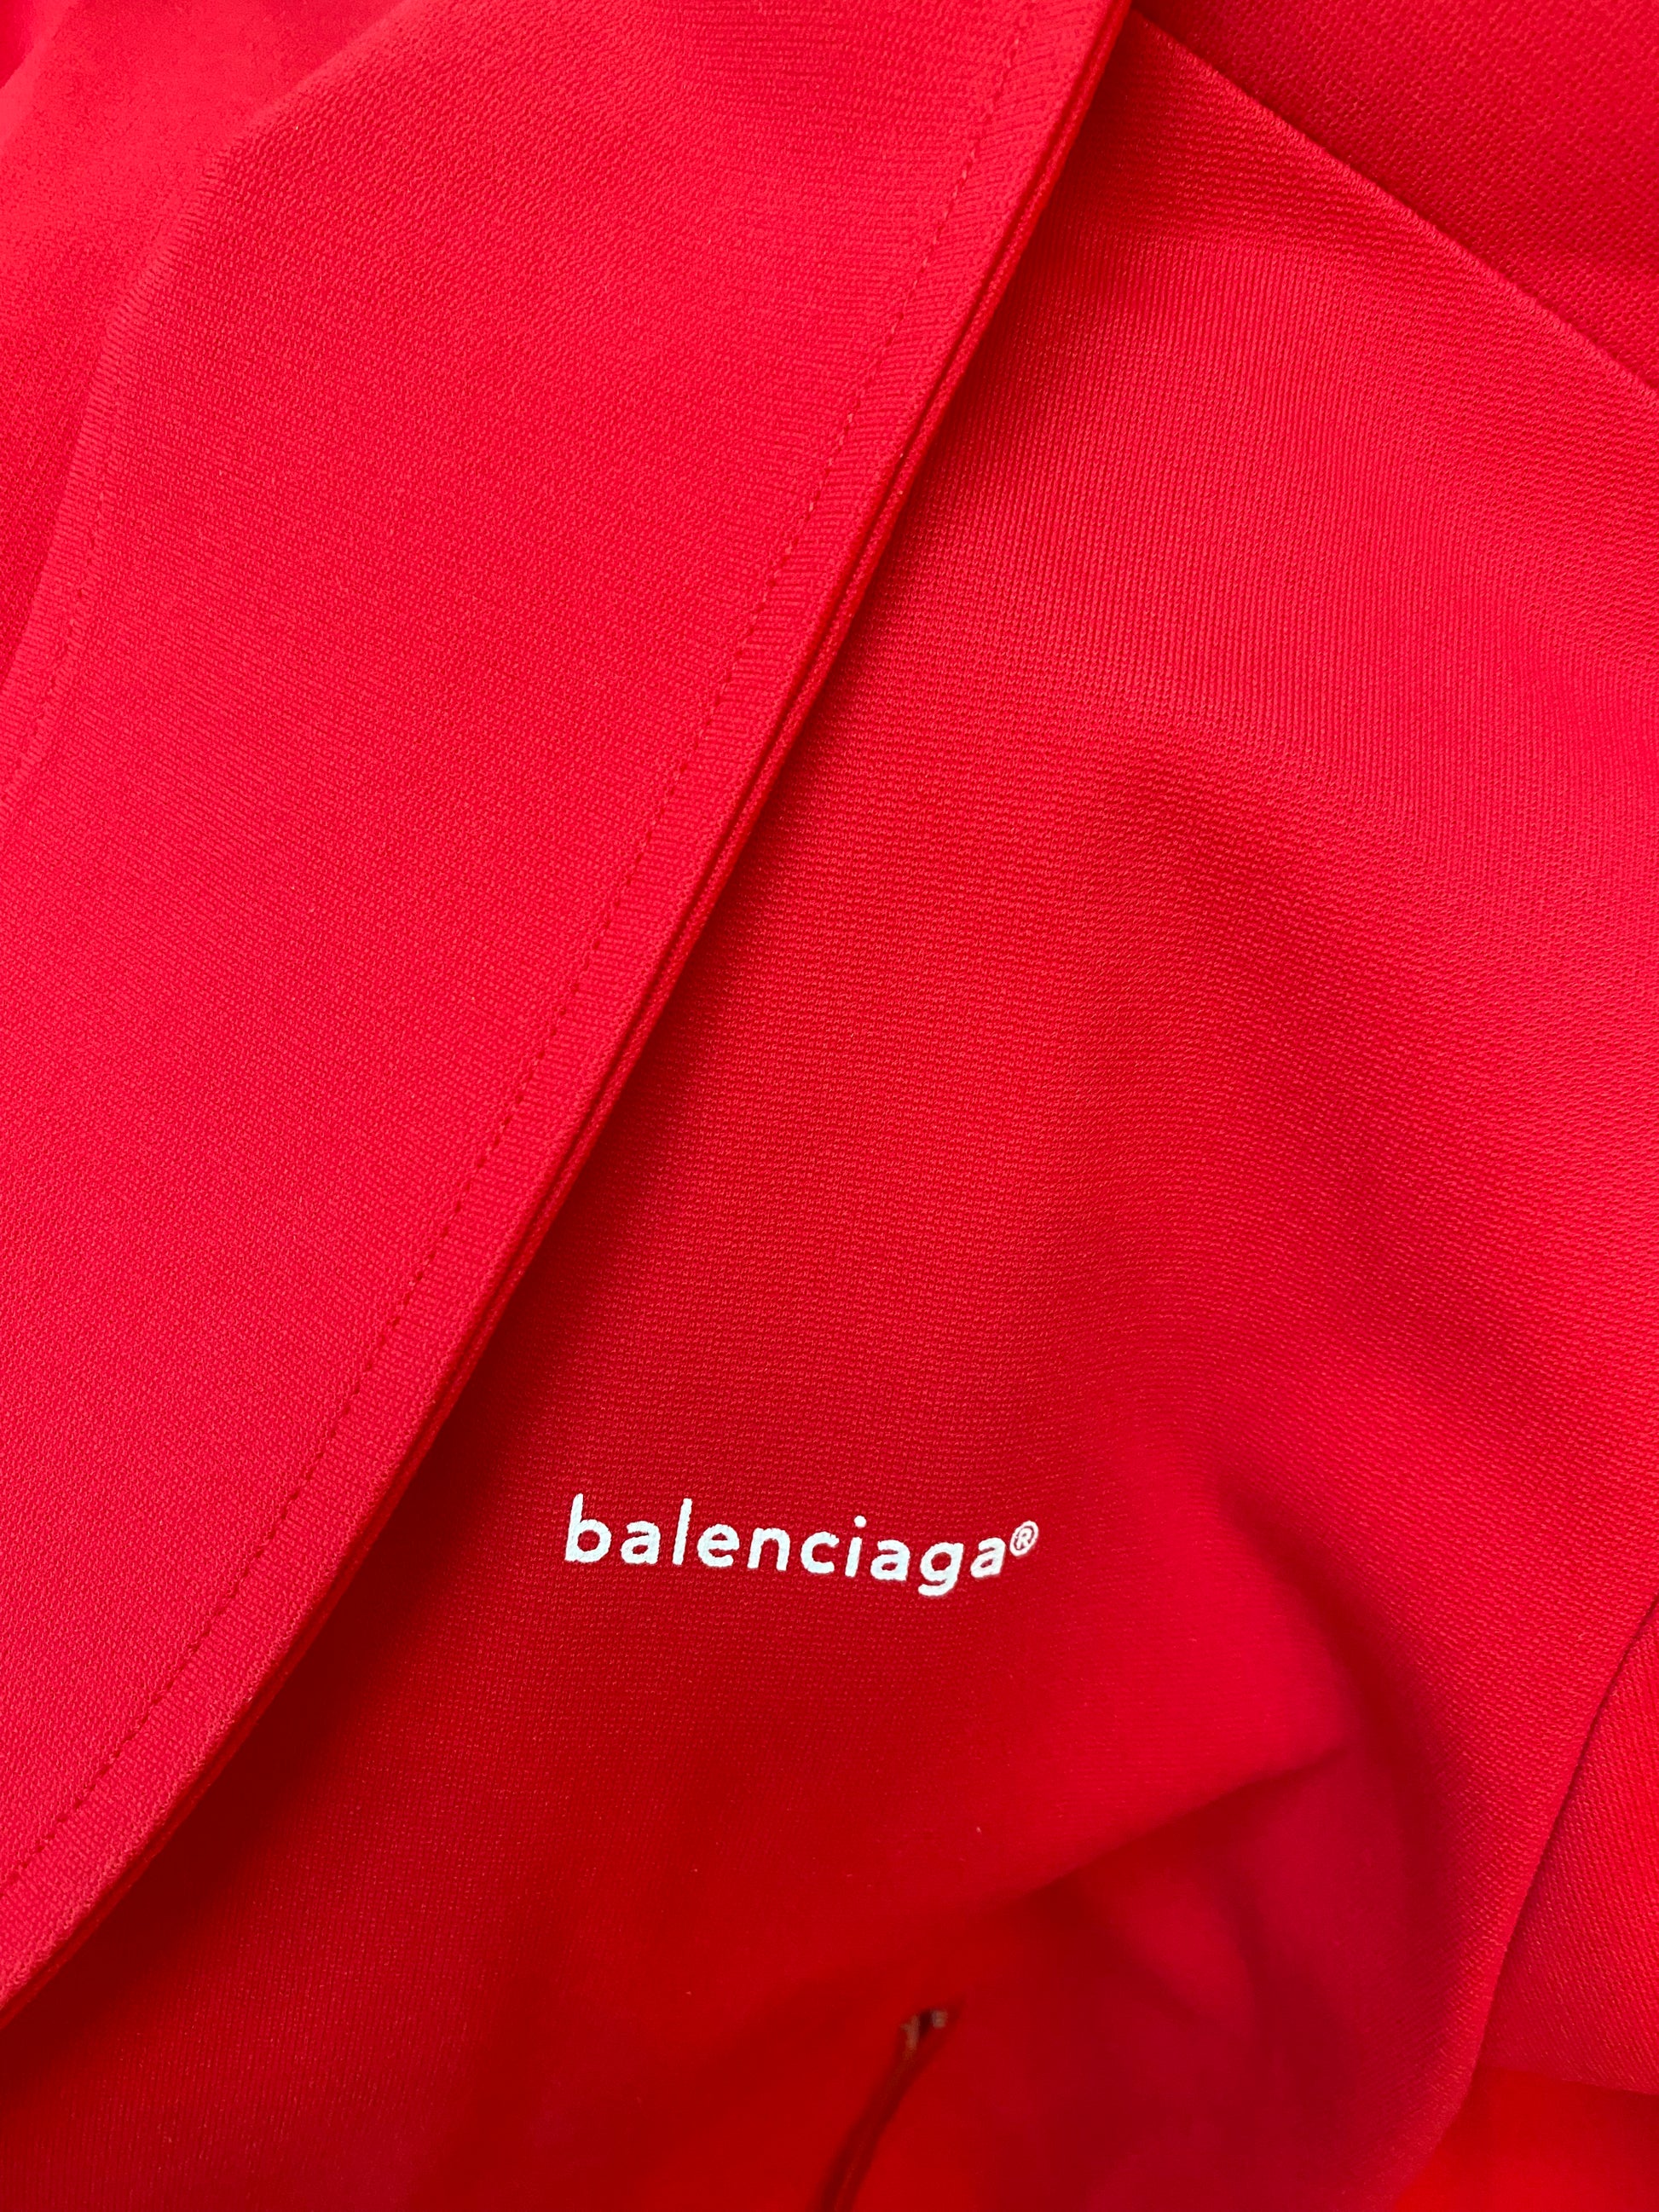 Balenciaga Bomber Jacket Clothing Red